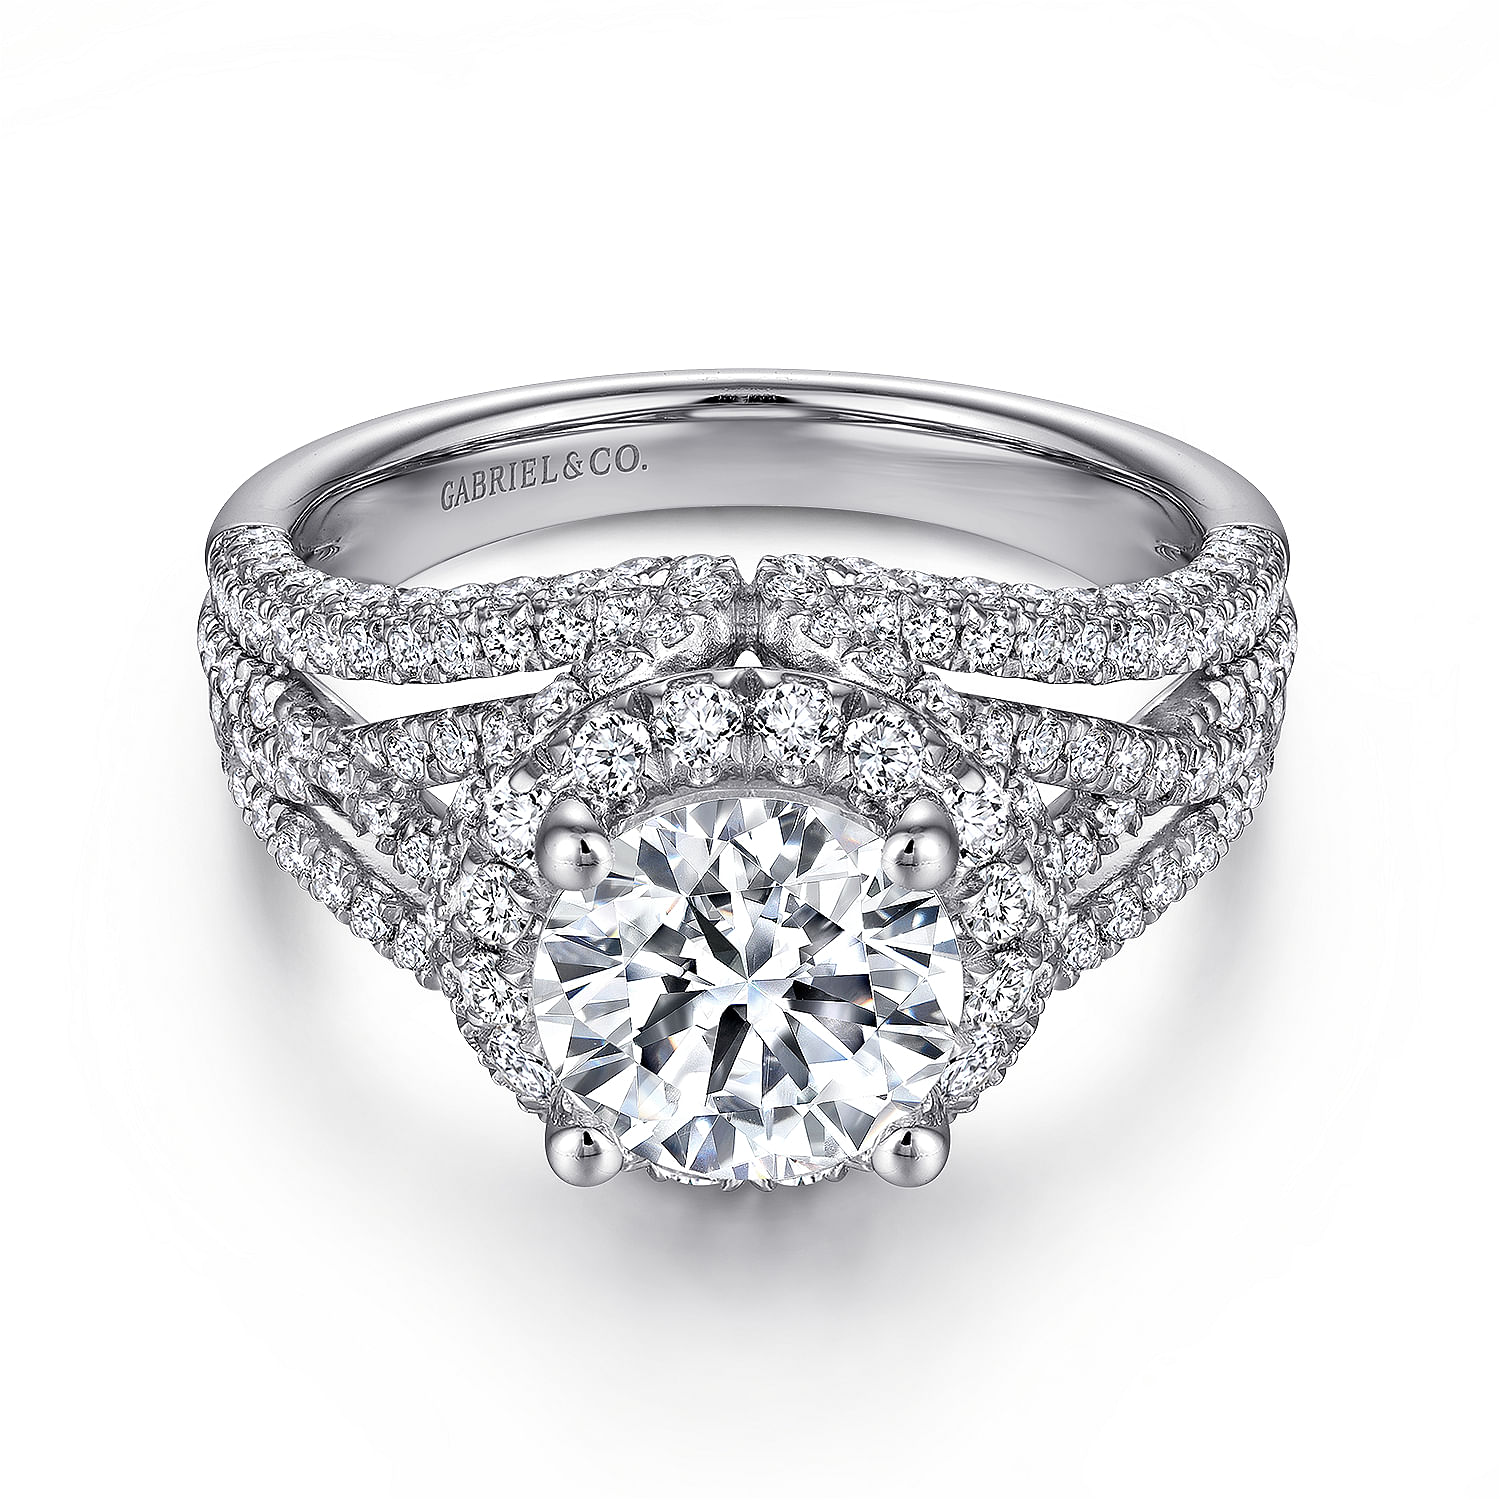 Delicacy - 14k White Gold Round Halo Diamond Engagement Ring